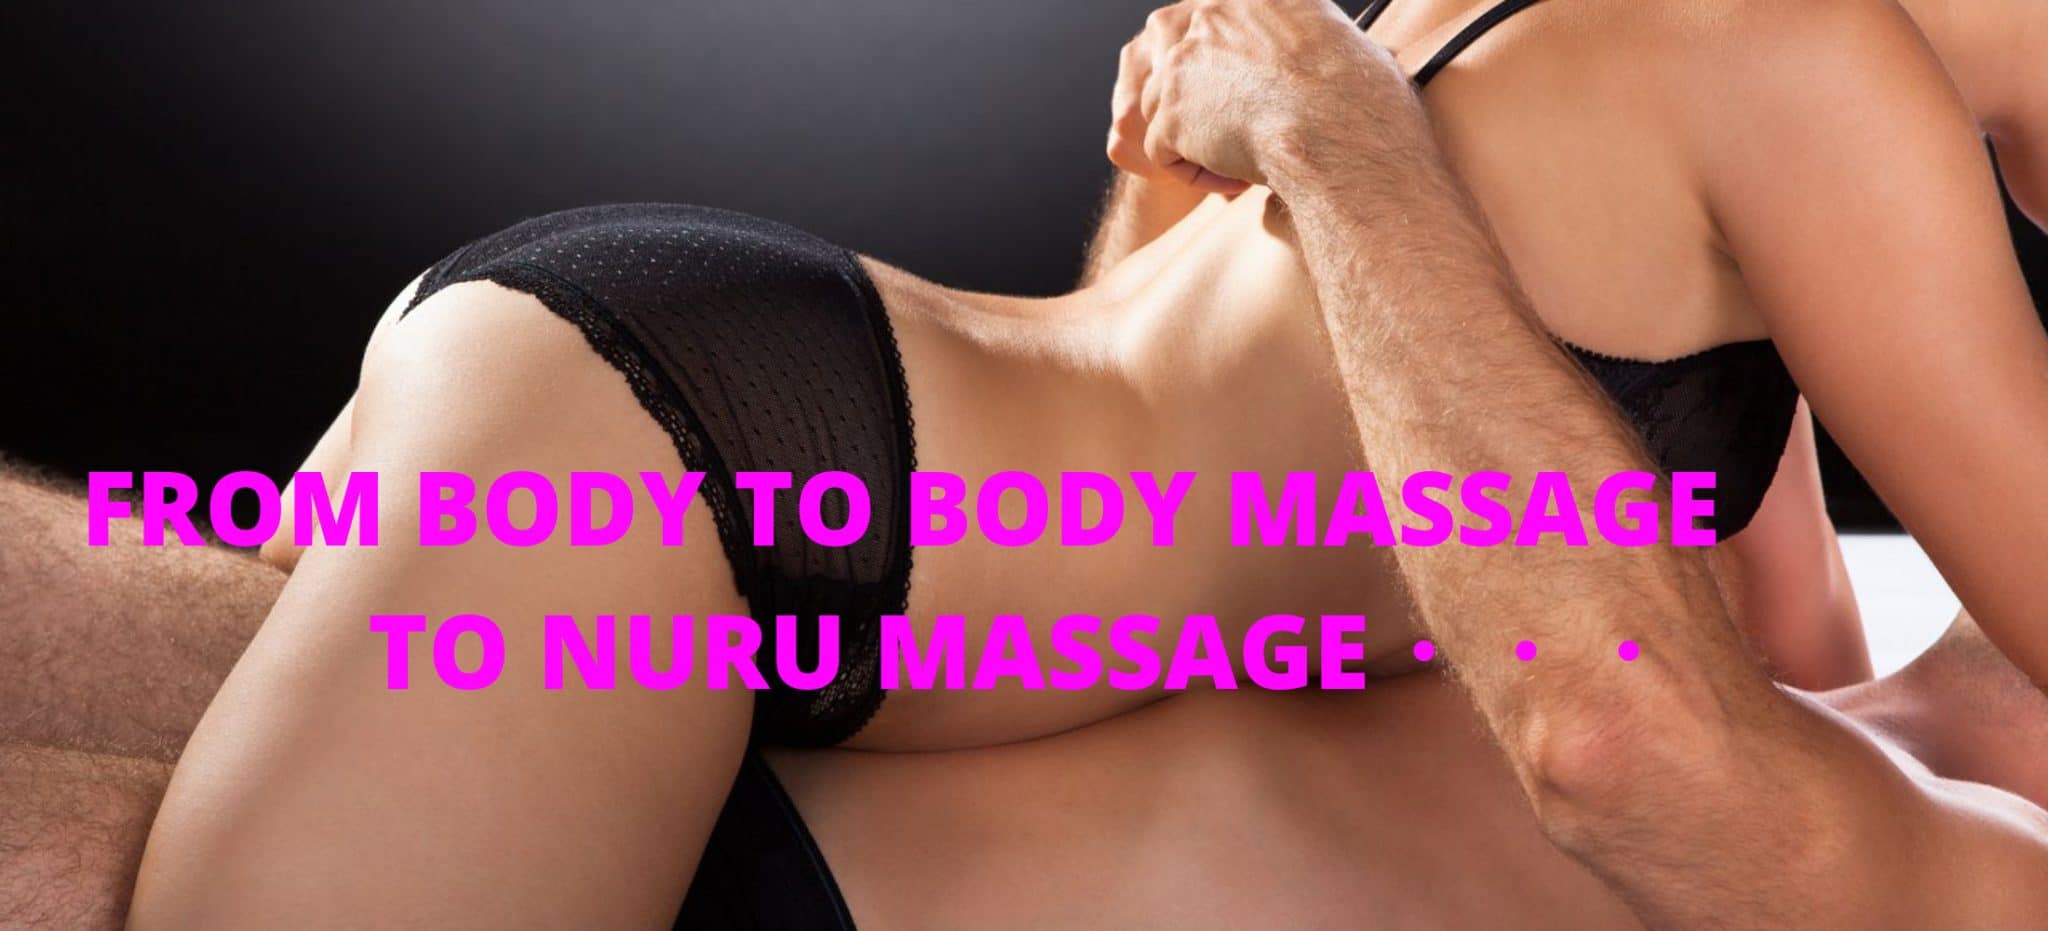 clara wolf recommends nuru massage for women pic